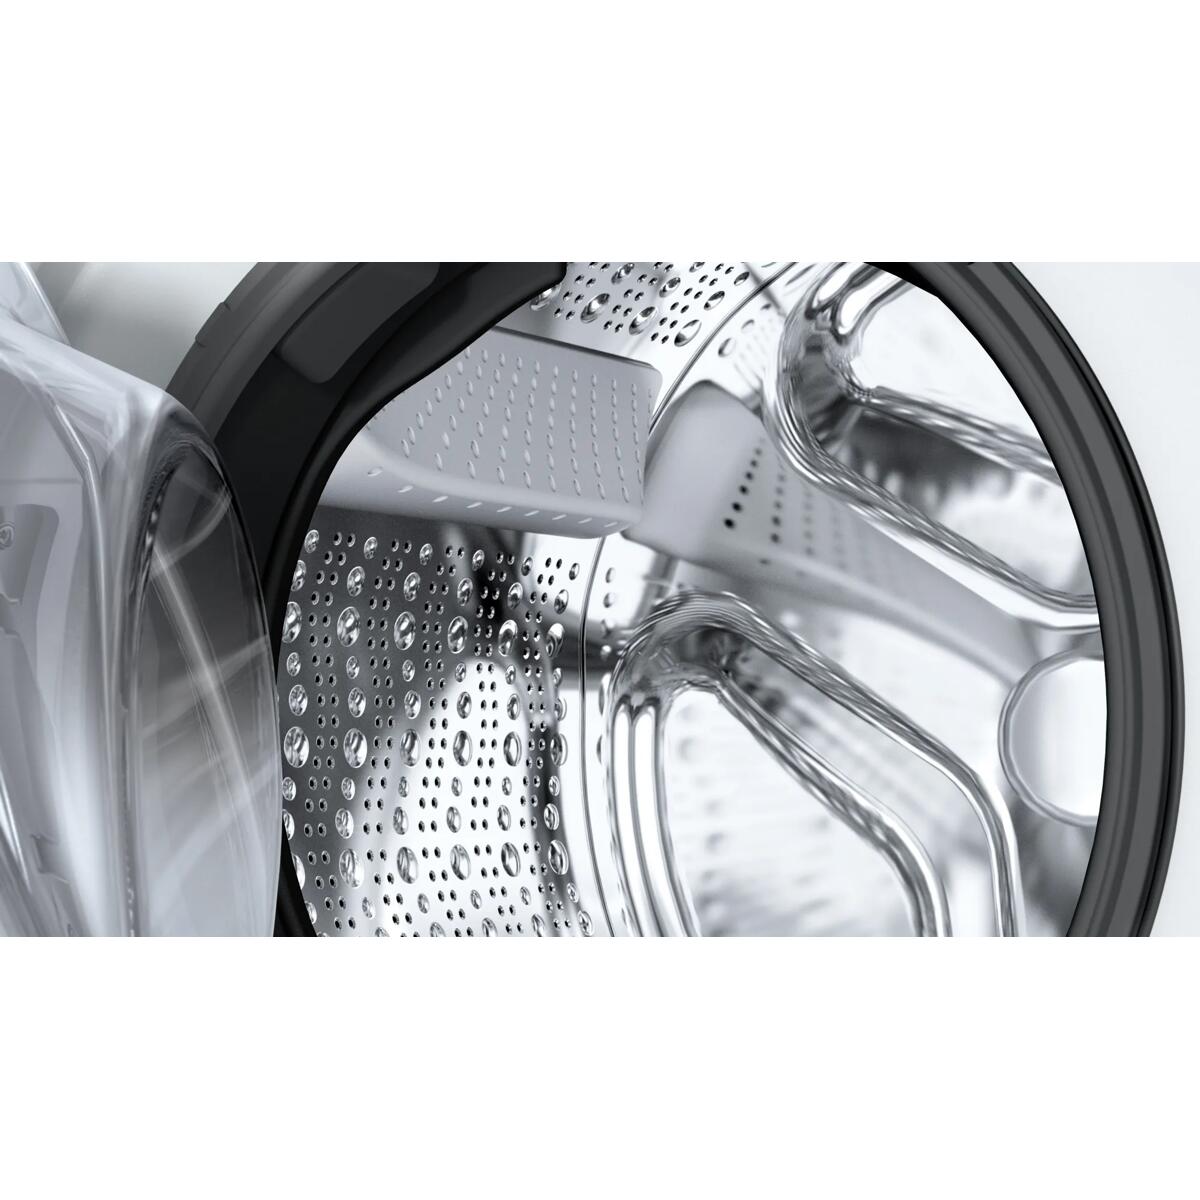 Bosch WGB246070 Waschmaschine, LED weiß 1400 Home Wagner Connect, 60cm Frontlader Serie Iron 8 9 U/min., Elektroshop kg Display, breit, Assist